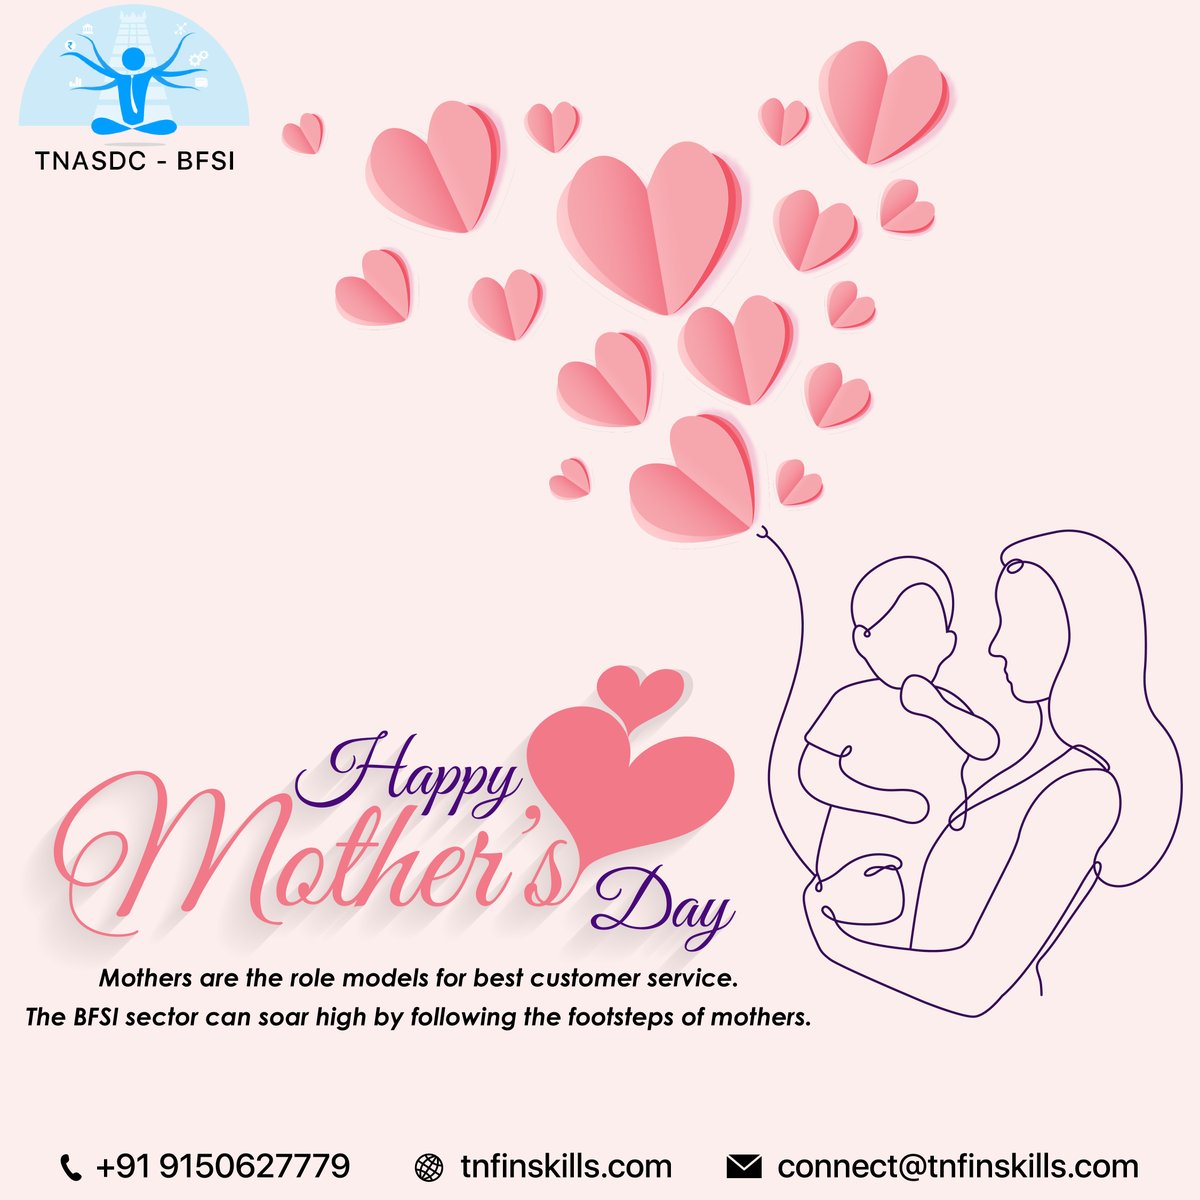 Happy Mother's Day💖

 #tnasdcbfsi #tnsdc #naanmudhalvan #mothersday